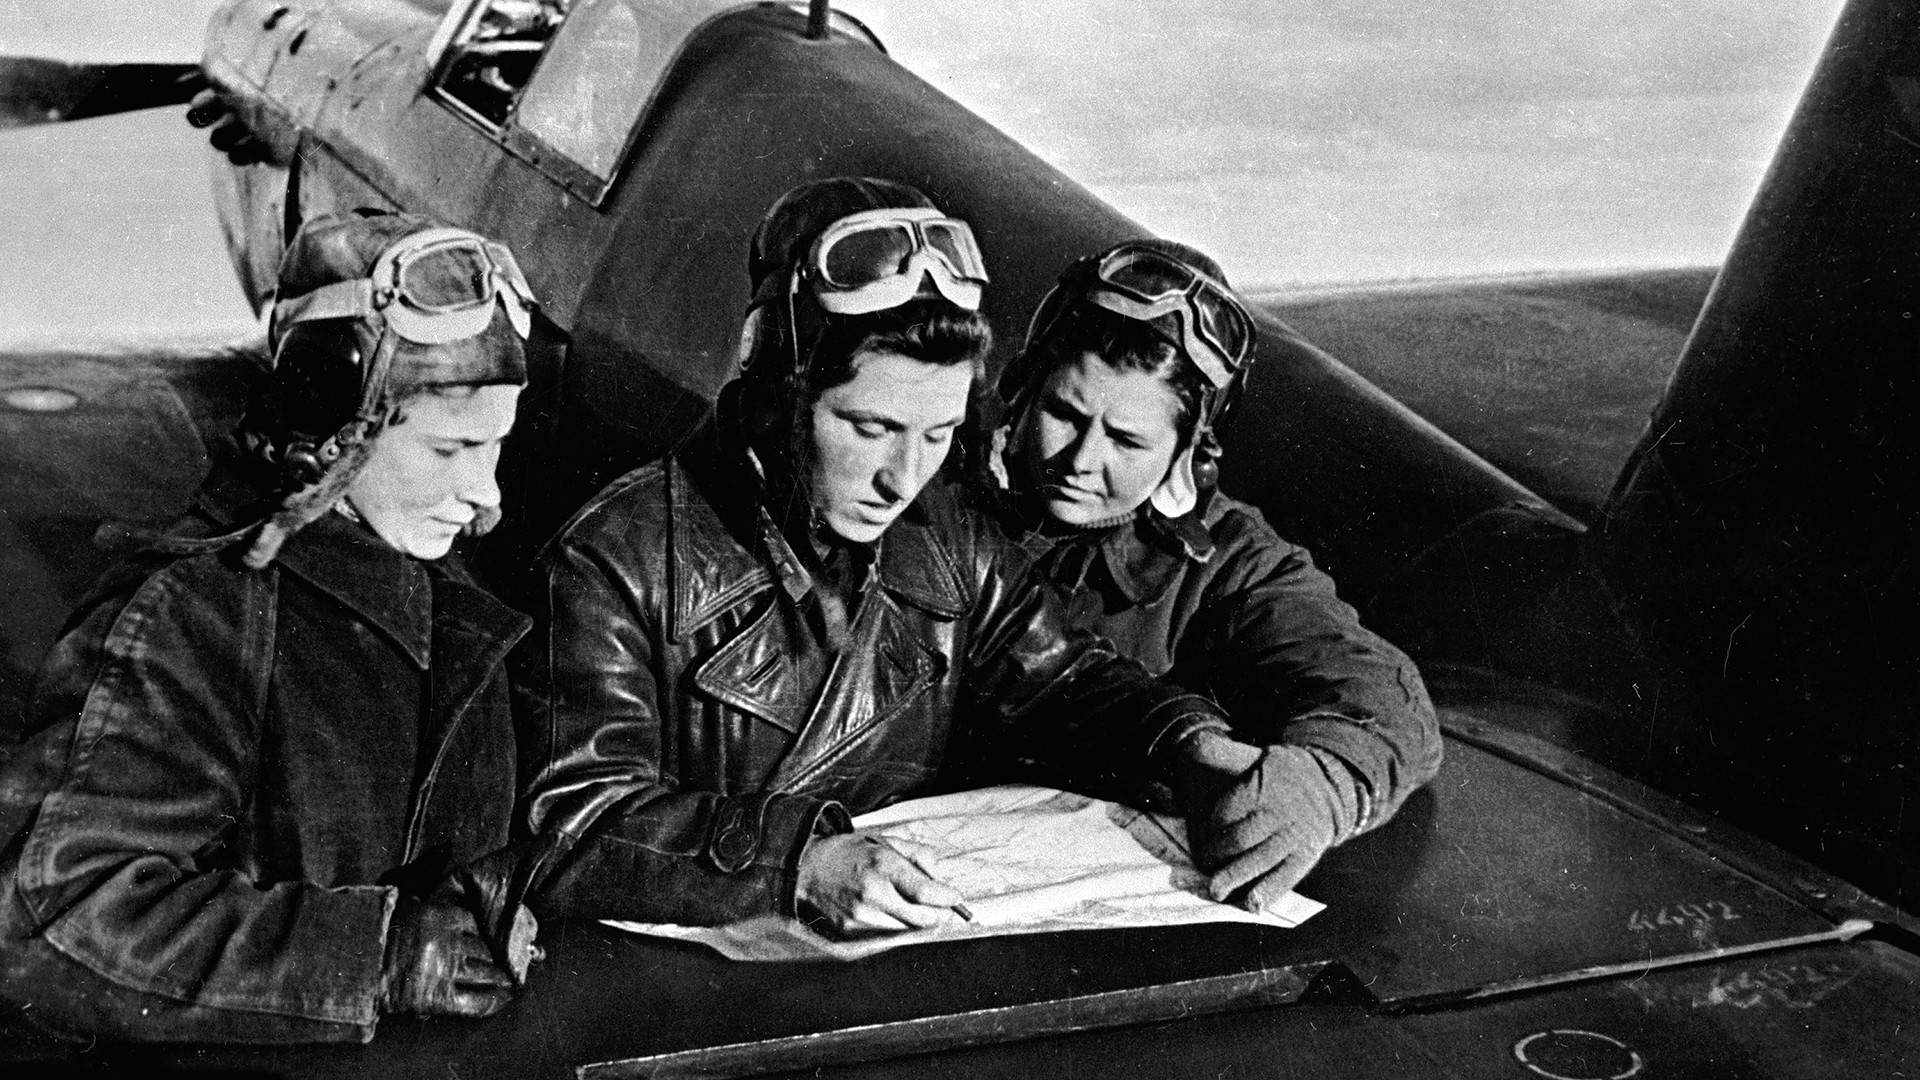 Litviak, Budánova and Kuznetsova junto al avión  Yak-1.